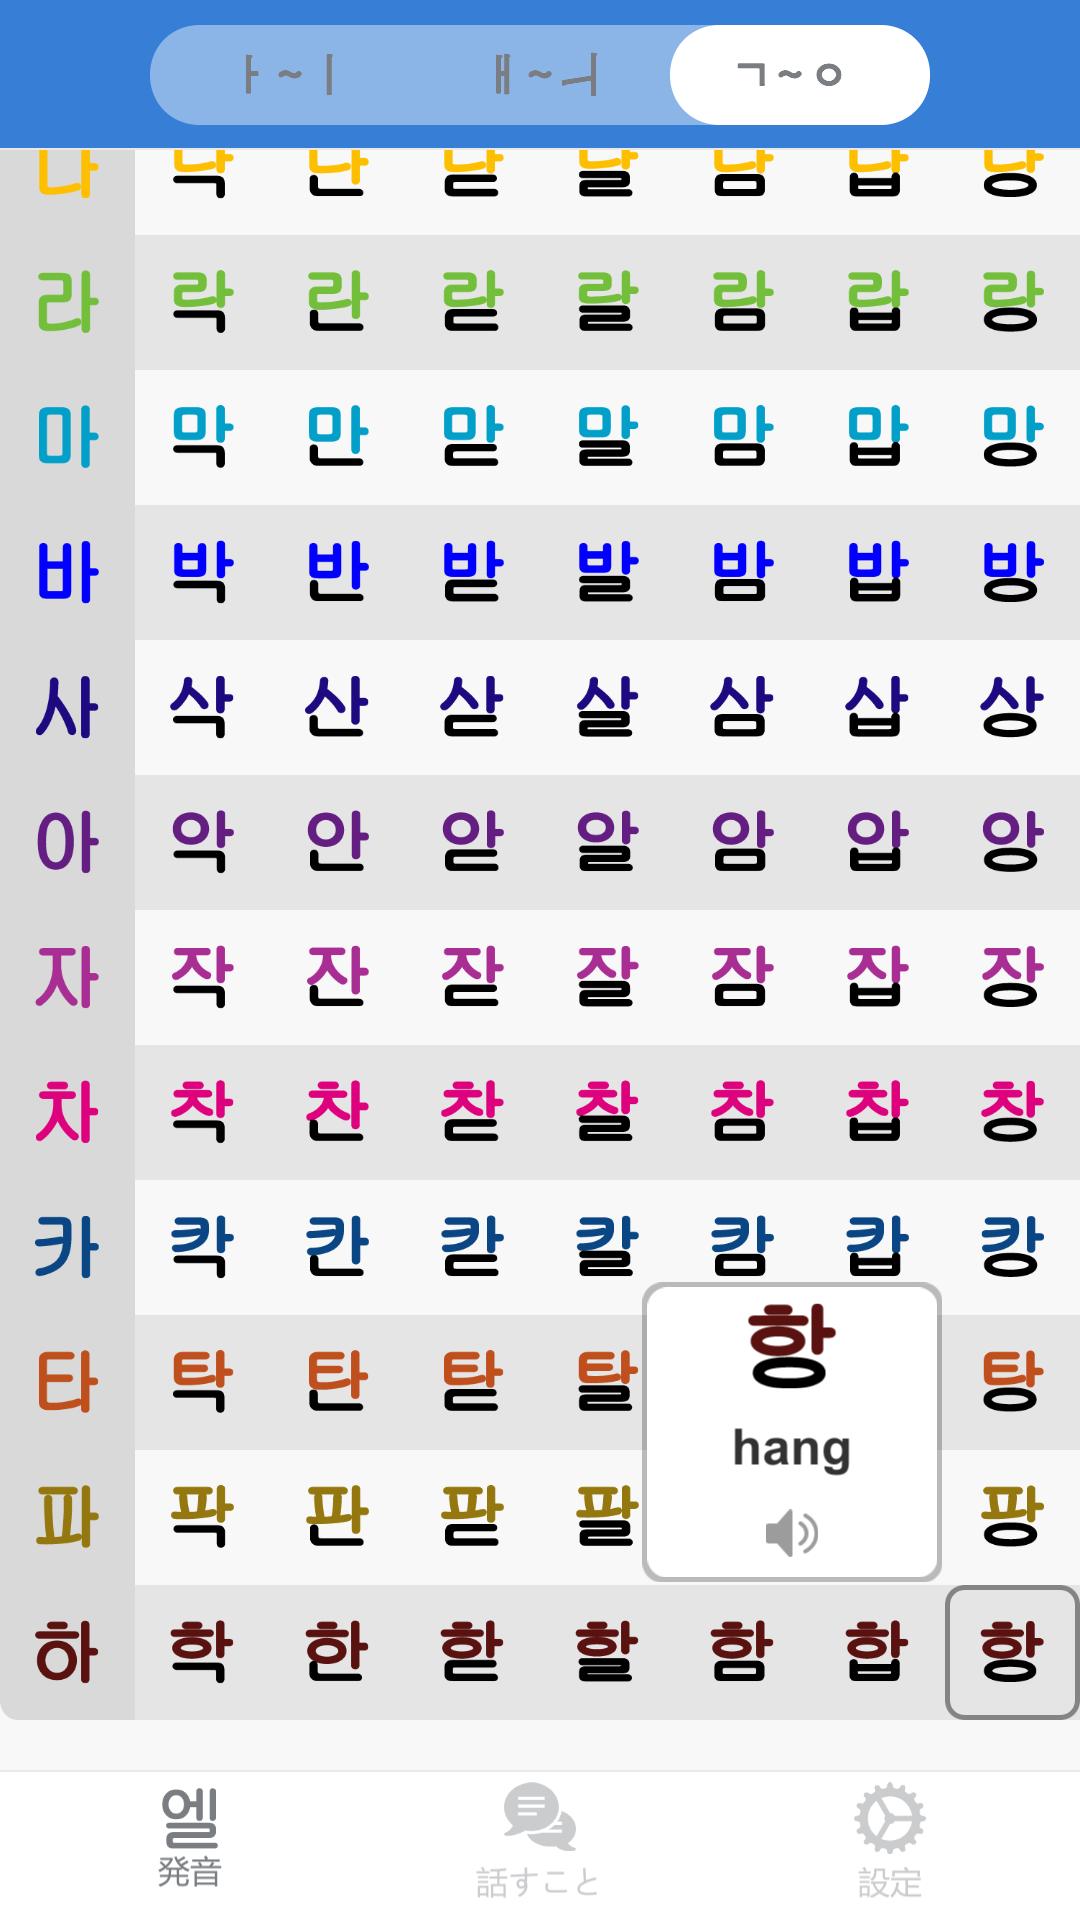 Android 用の 韓国語アルファベット発音表 Pro 韓国語会話短い文章とレタリングの発音 韓国語翻訳 韓国語学習 Apk をダウンロード